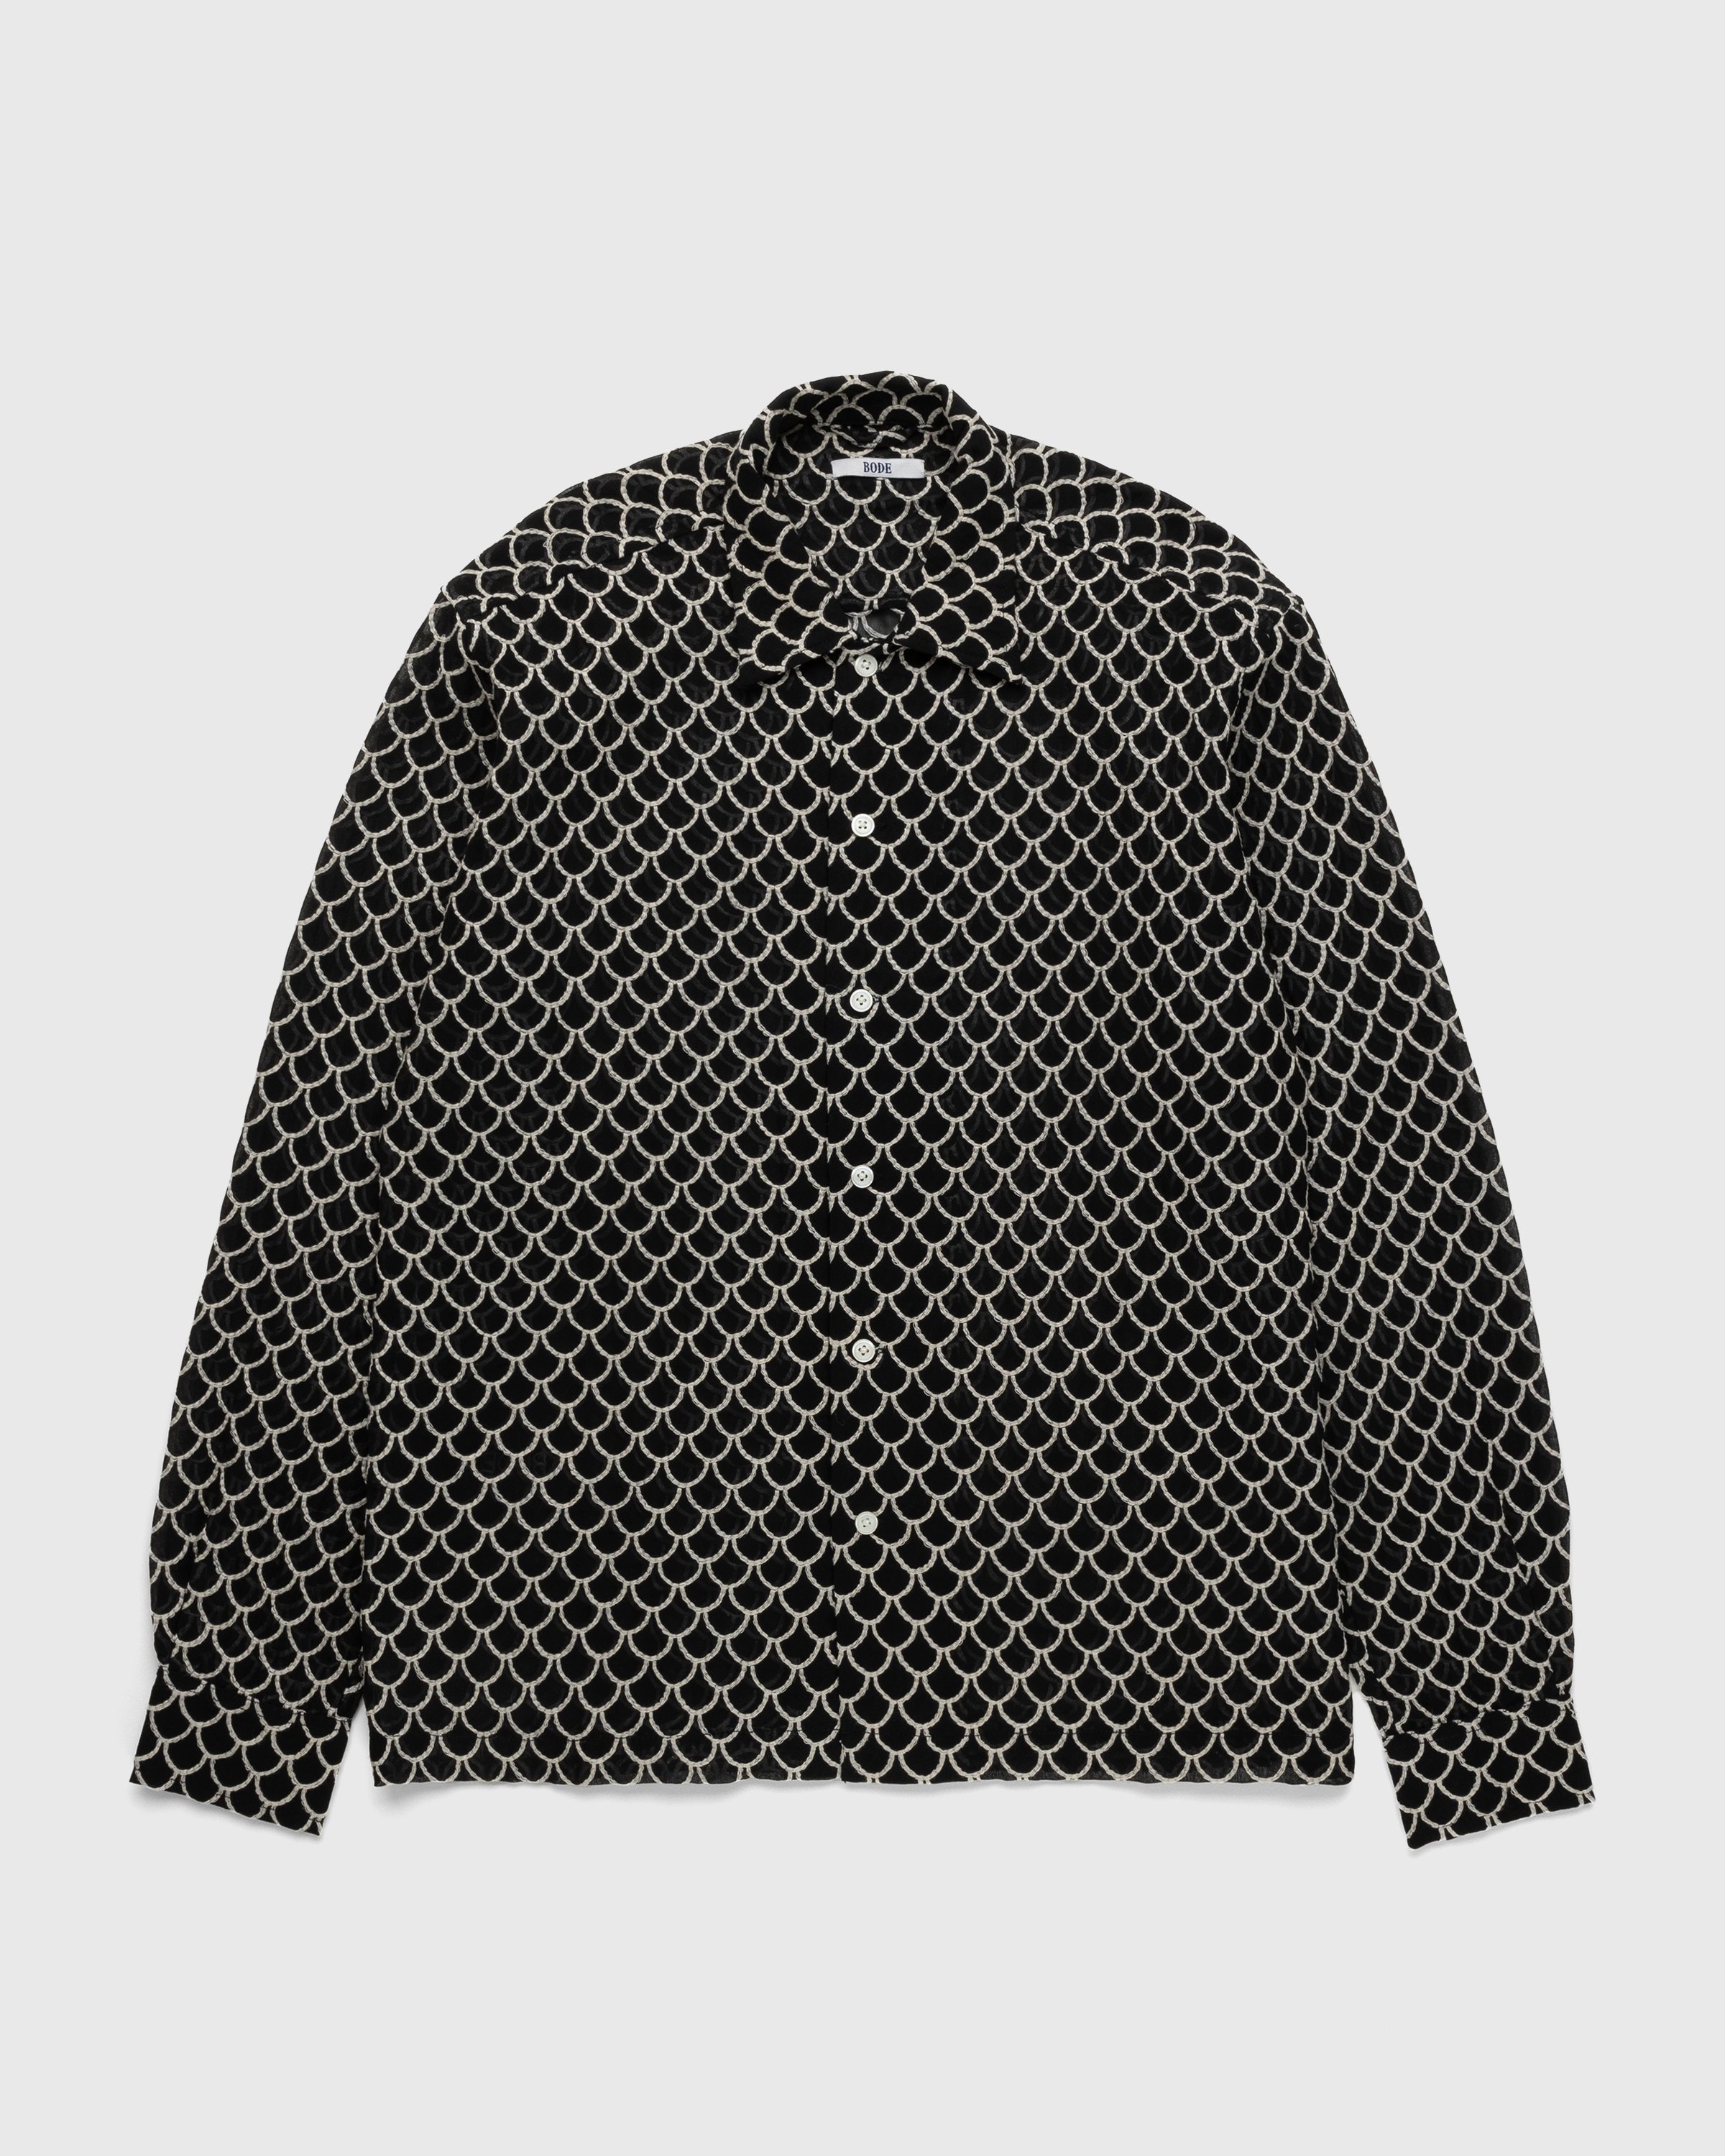 Bode - Embroidered Sheer Siren Long-Sleeve Shirt Black - Clothing - Black - Image 1